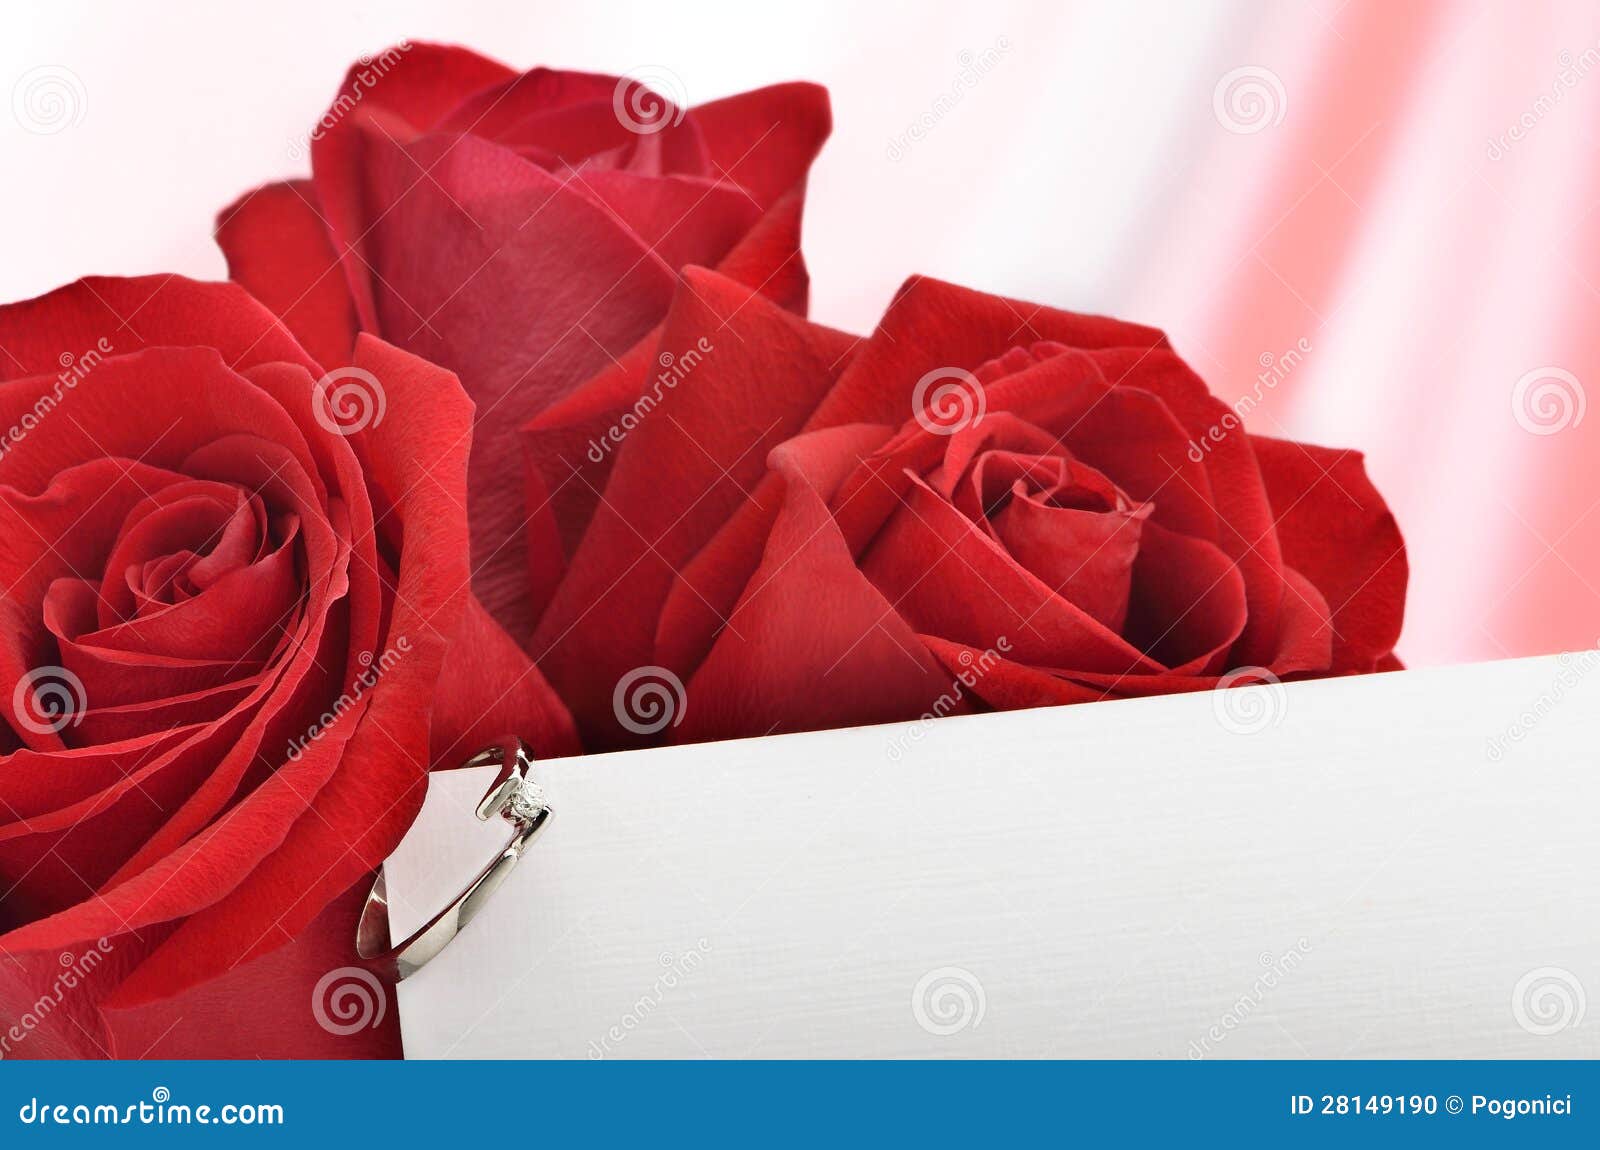 Be my Valentine! stock photo. Image of celebration, closeup - 28149190